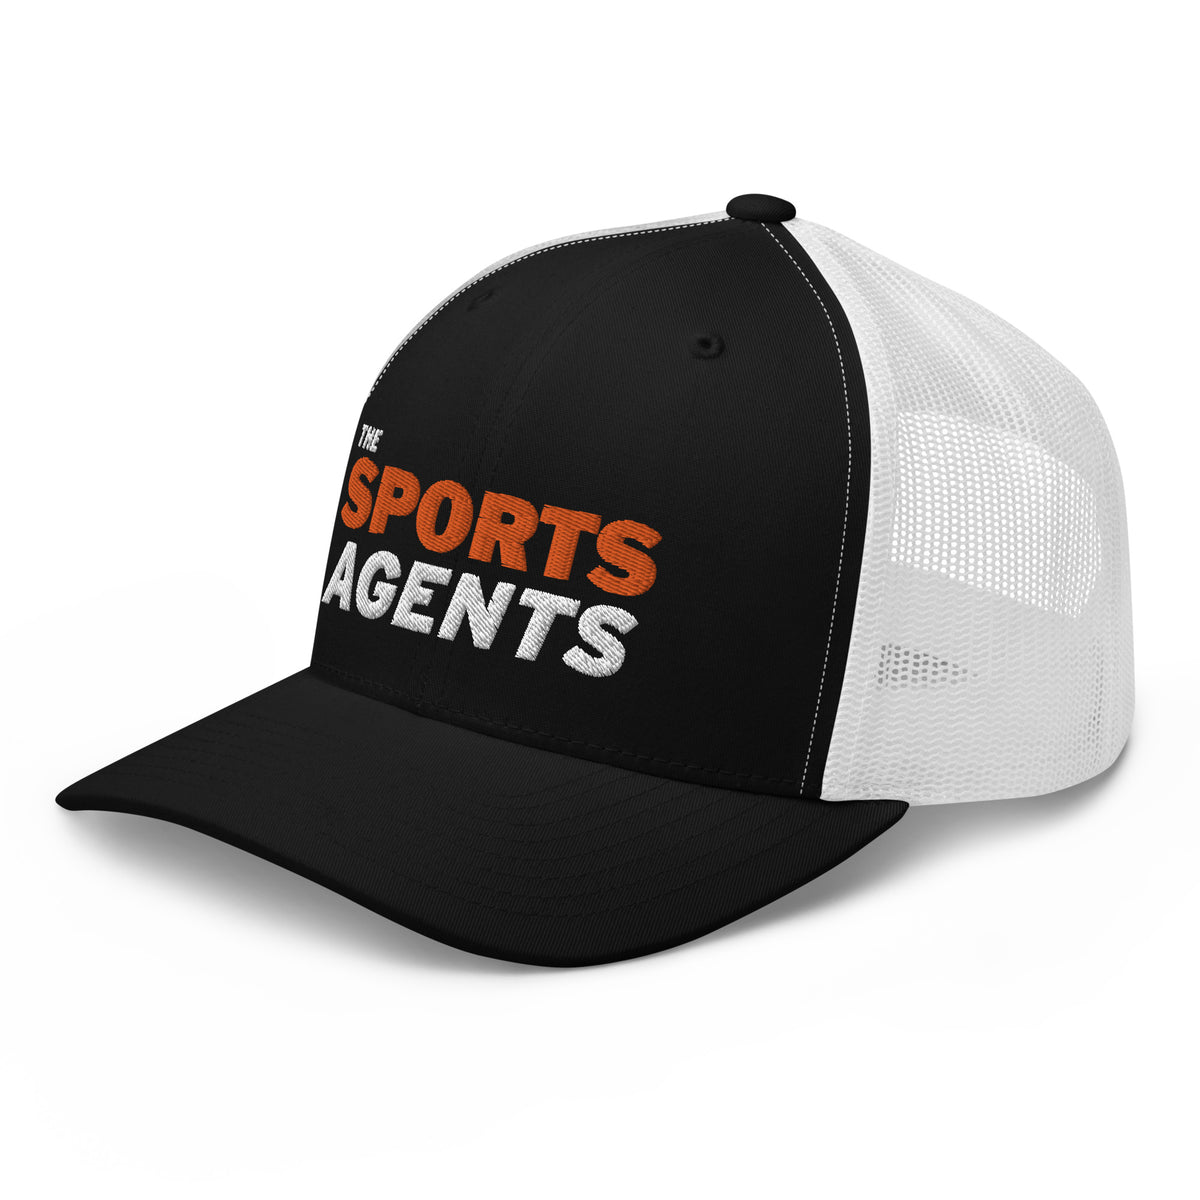 The Sports Agents Black Trucker Cap